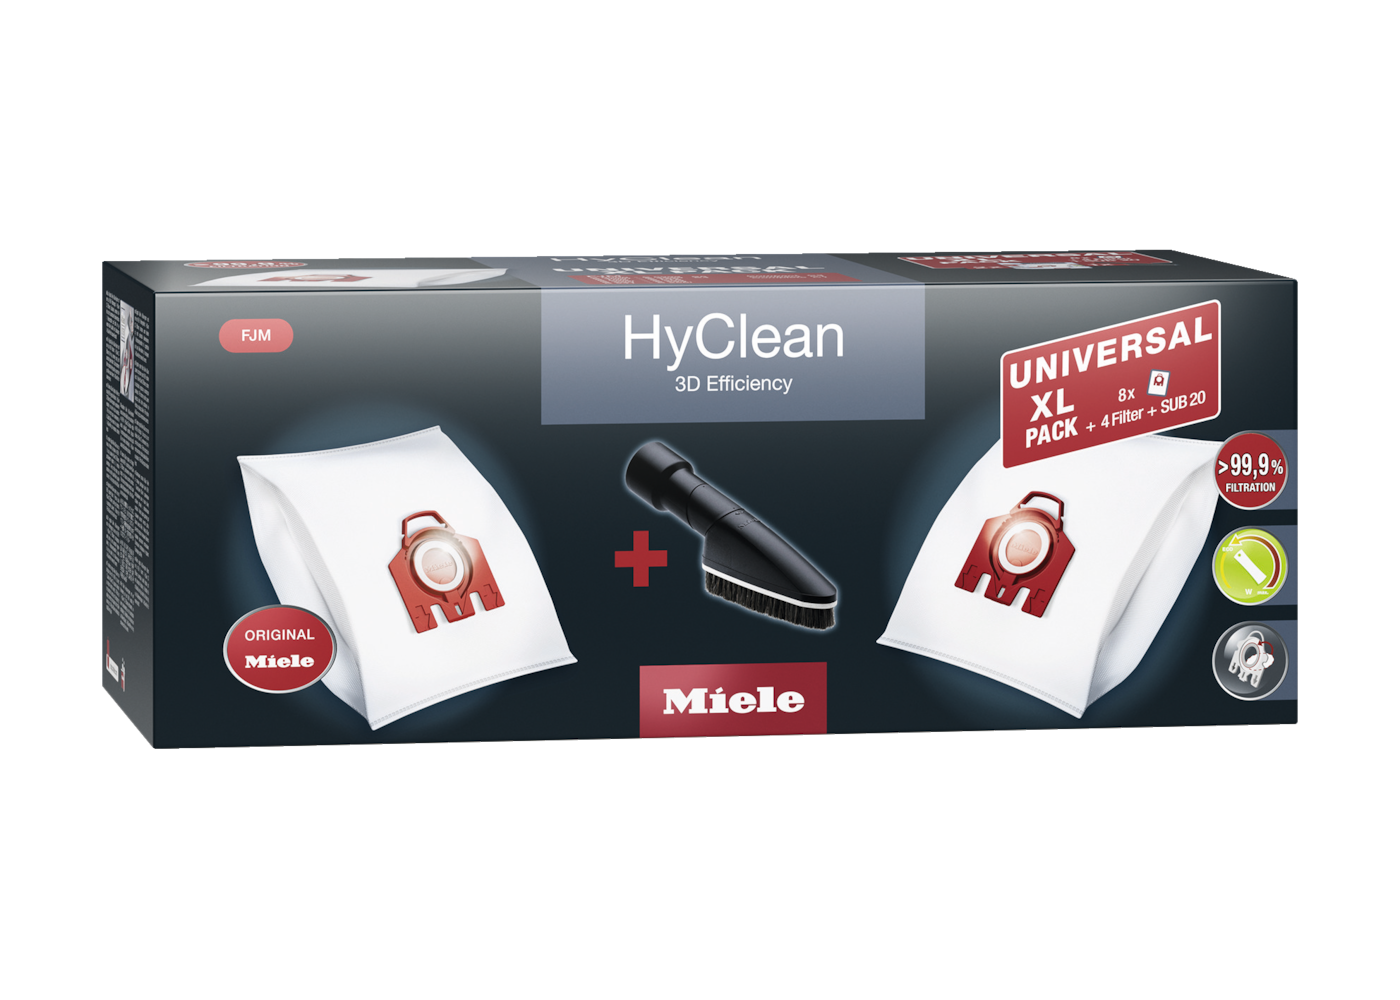 Universal XL-Pack FJM - Universal XL pack HyClean 3D Efficiency FJM 